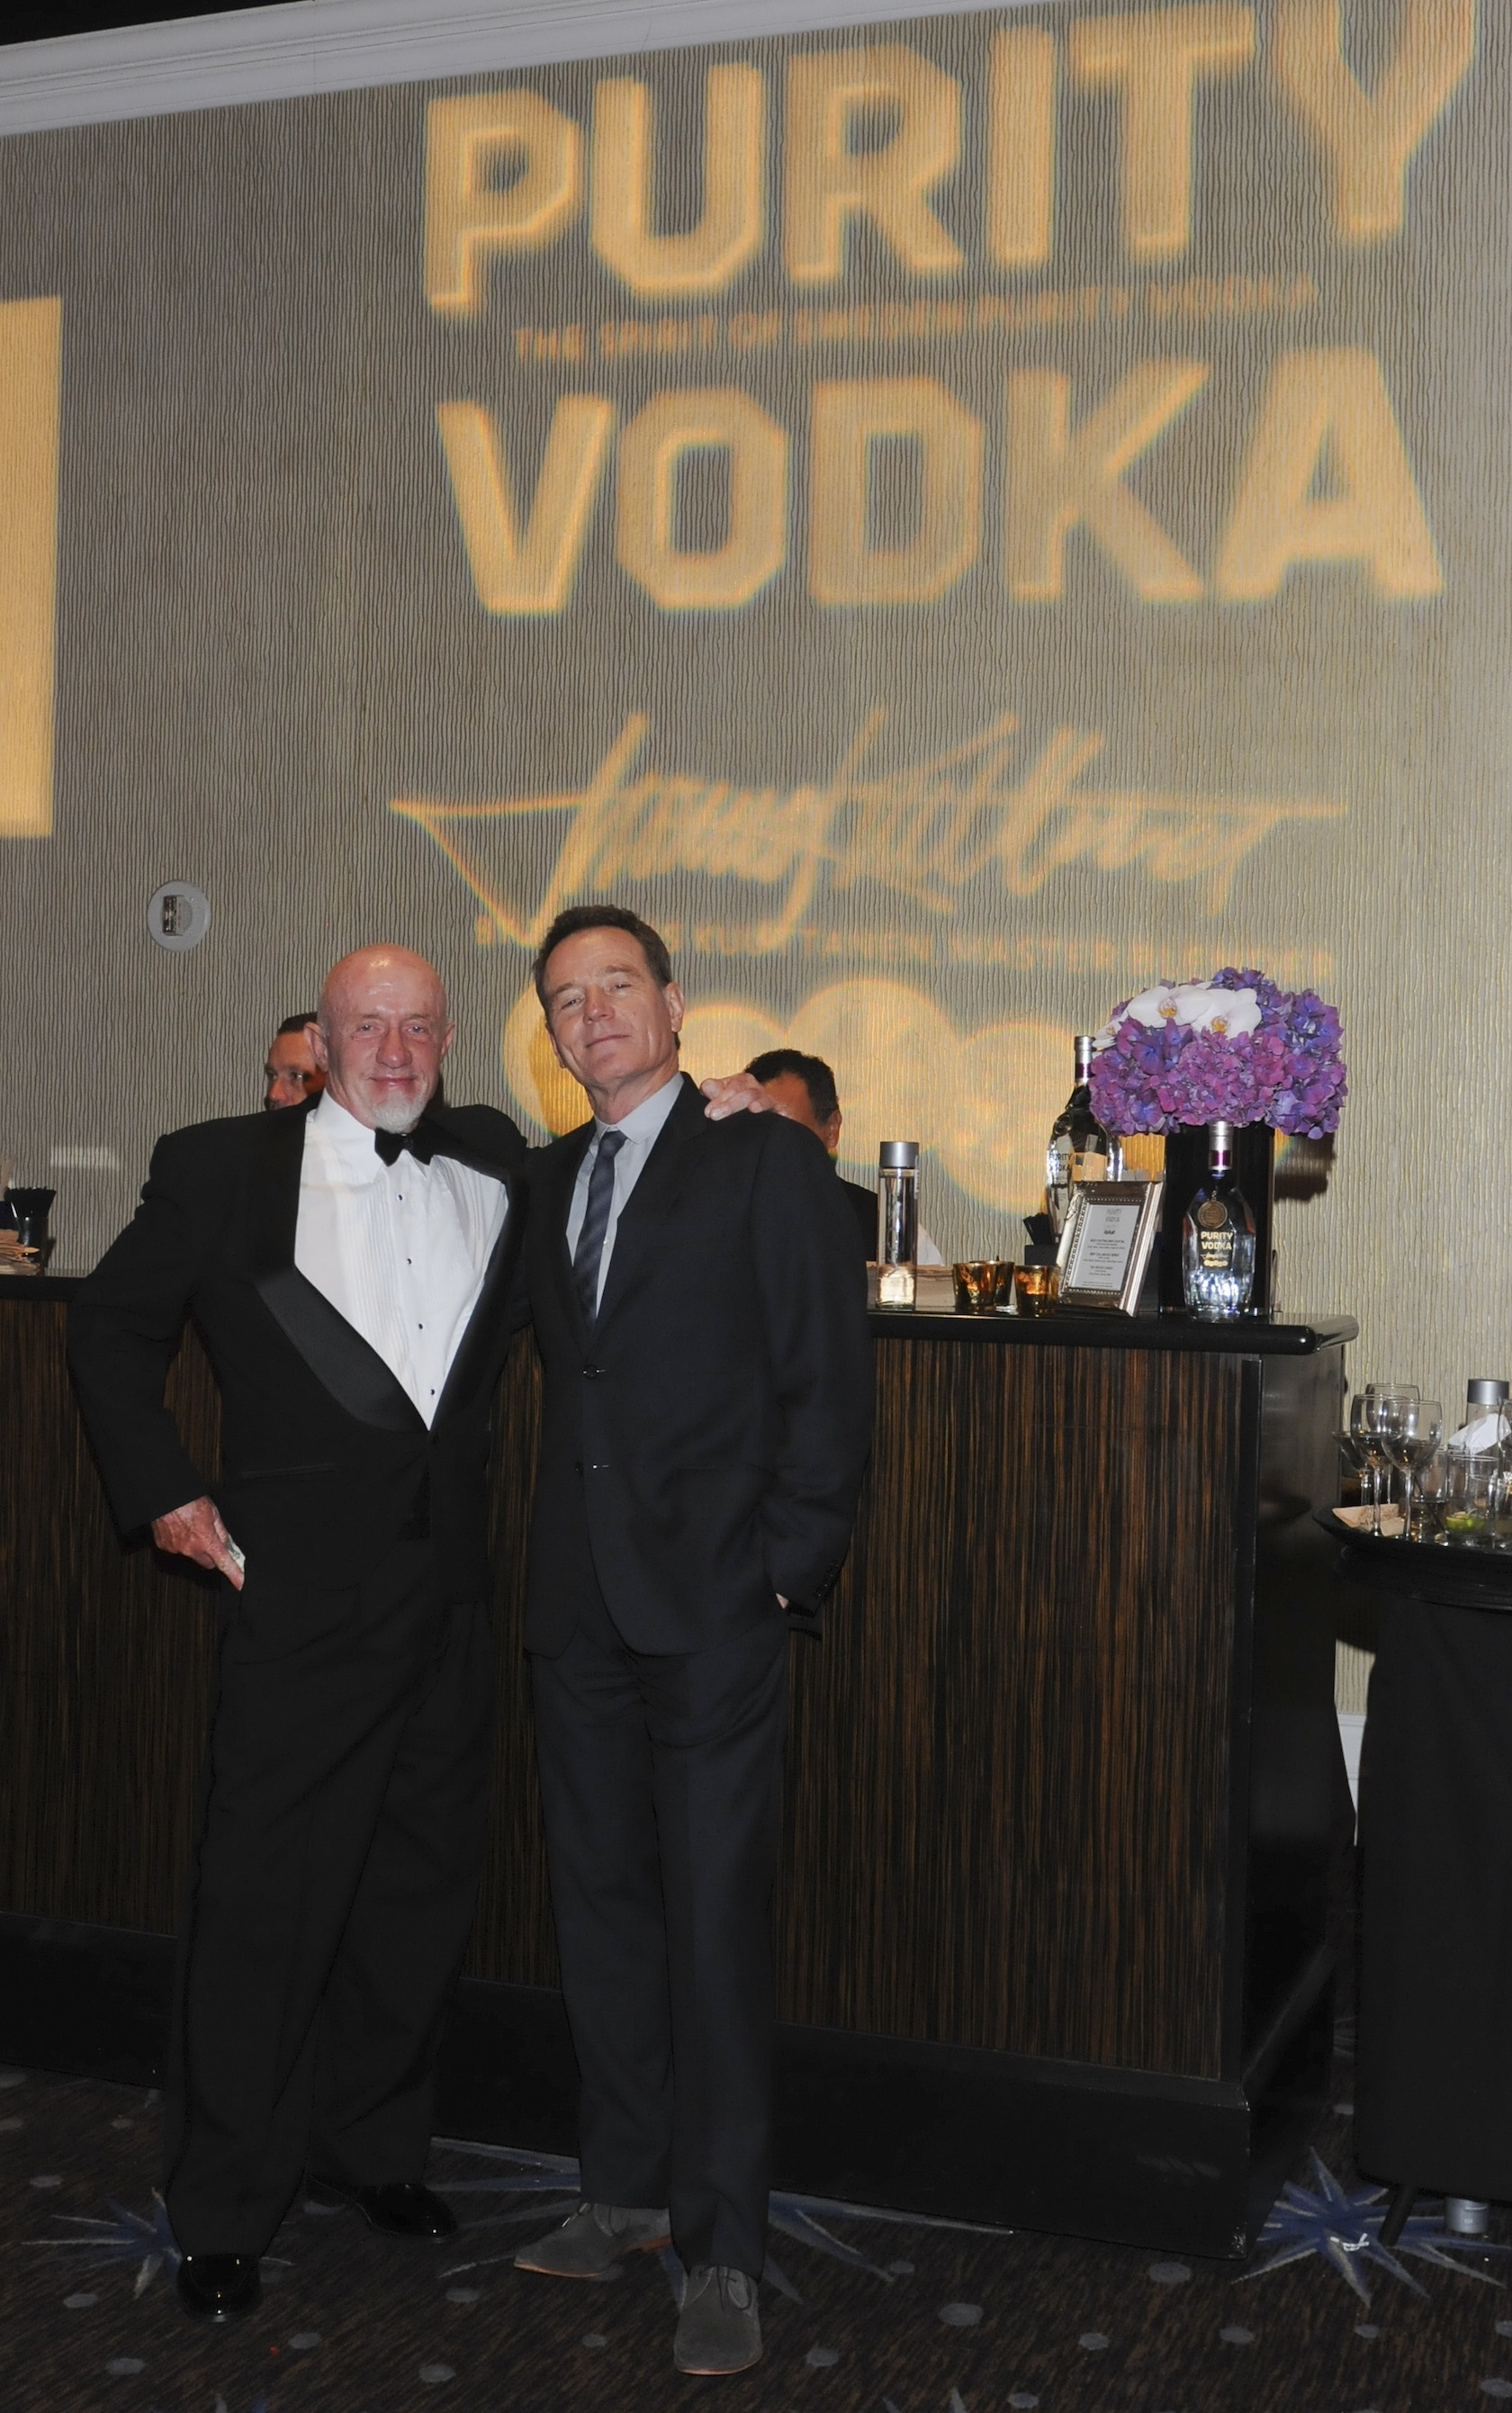 Jonathan Banks and Bryan Cranston  at the Critics' Choice Awards sponsored by Purity Vodka